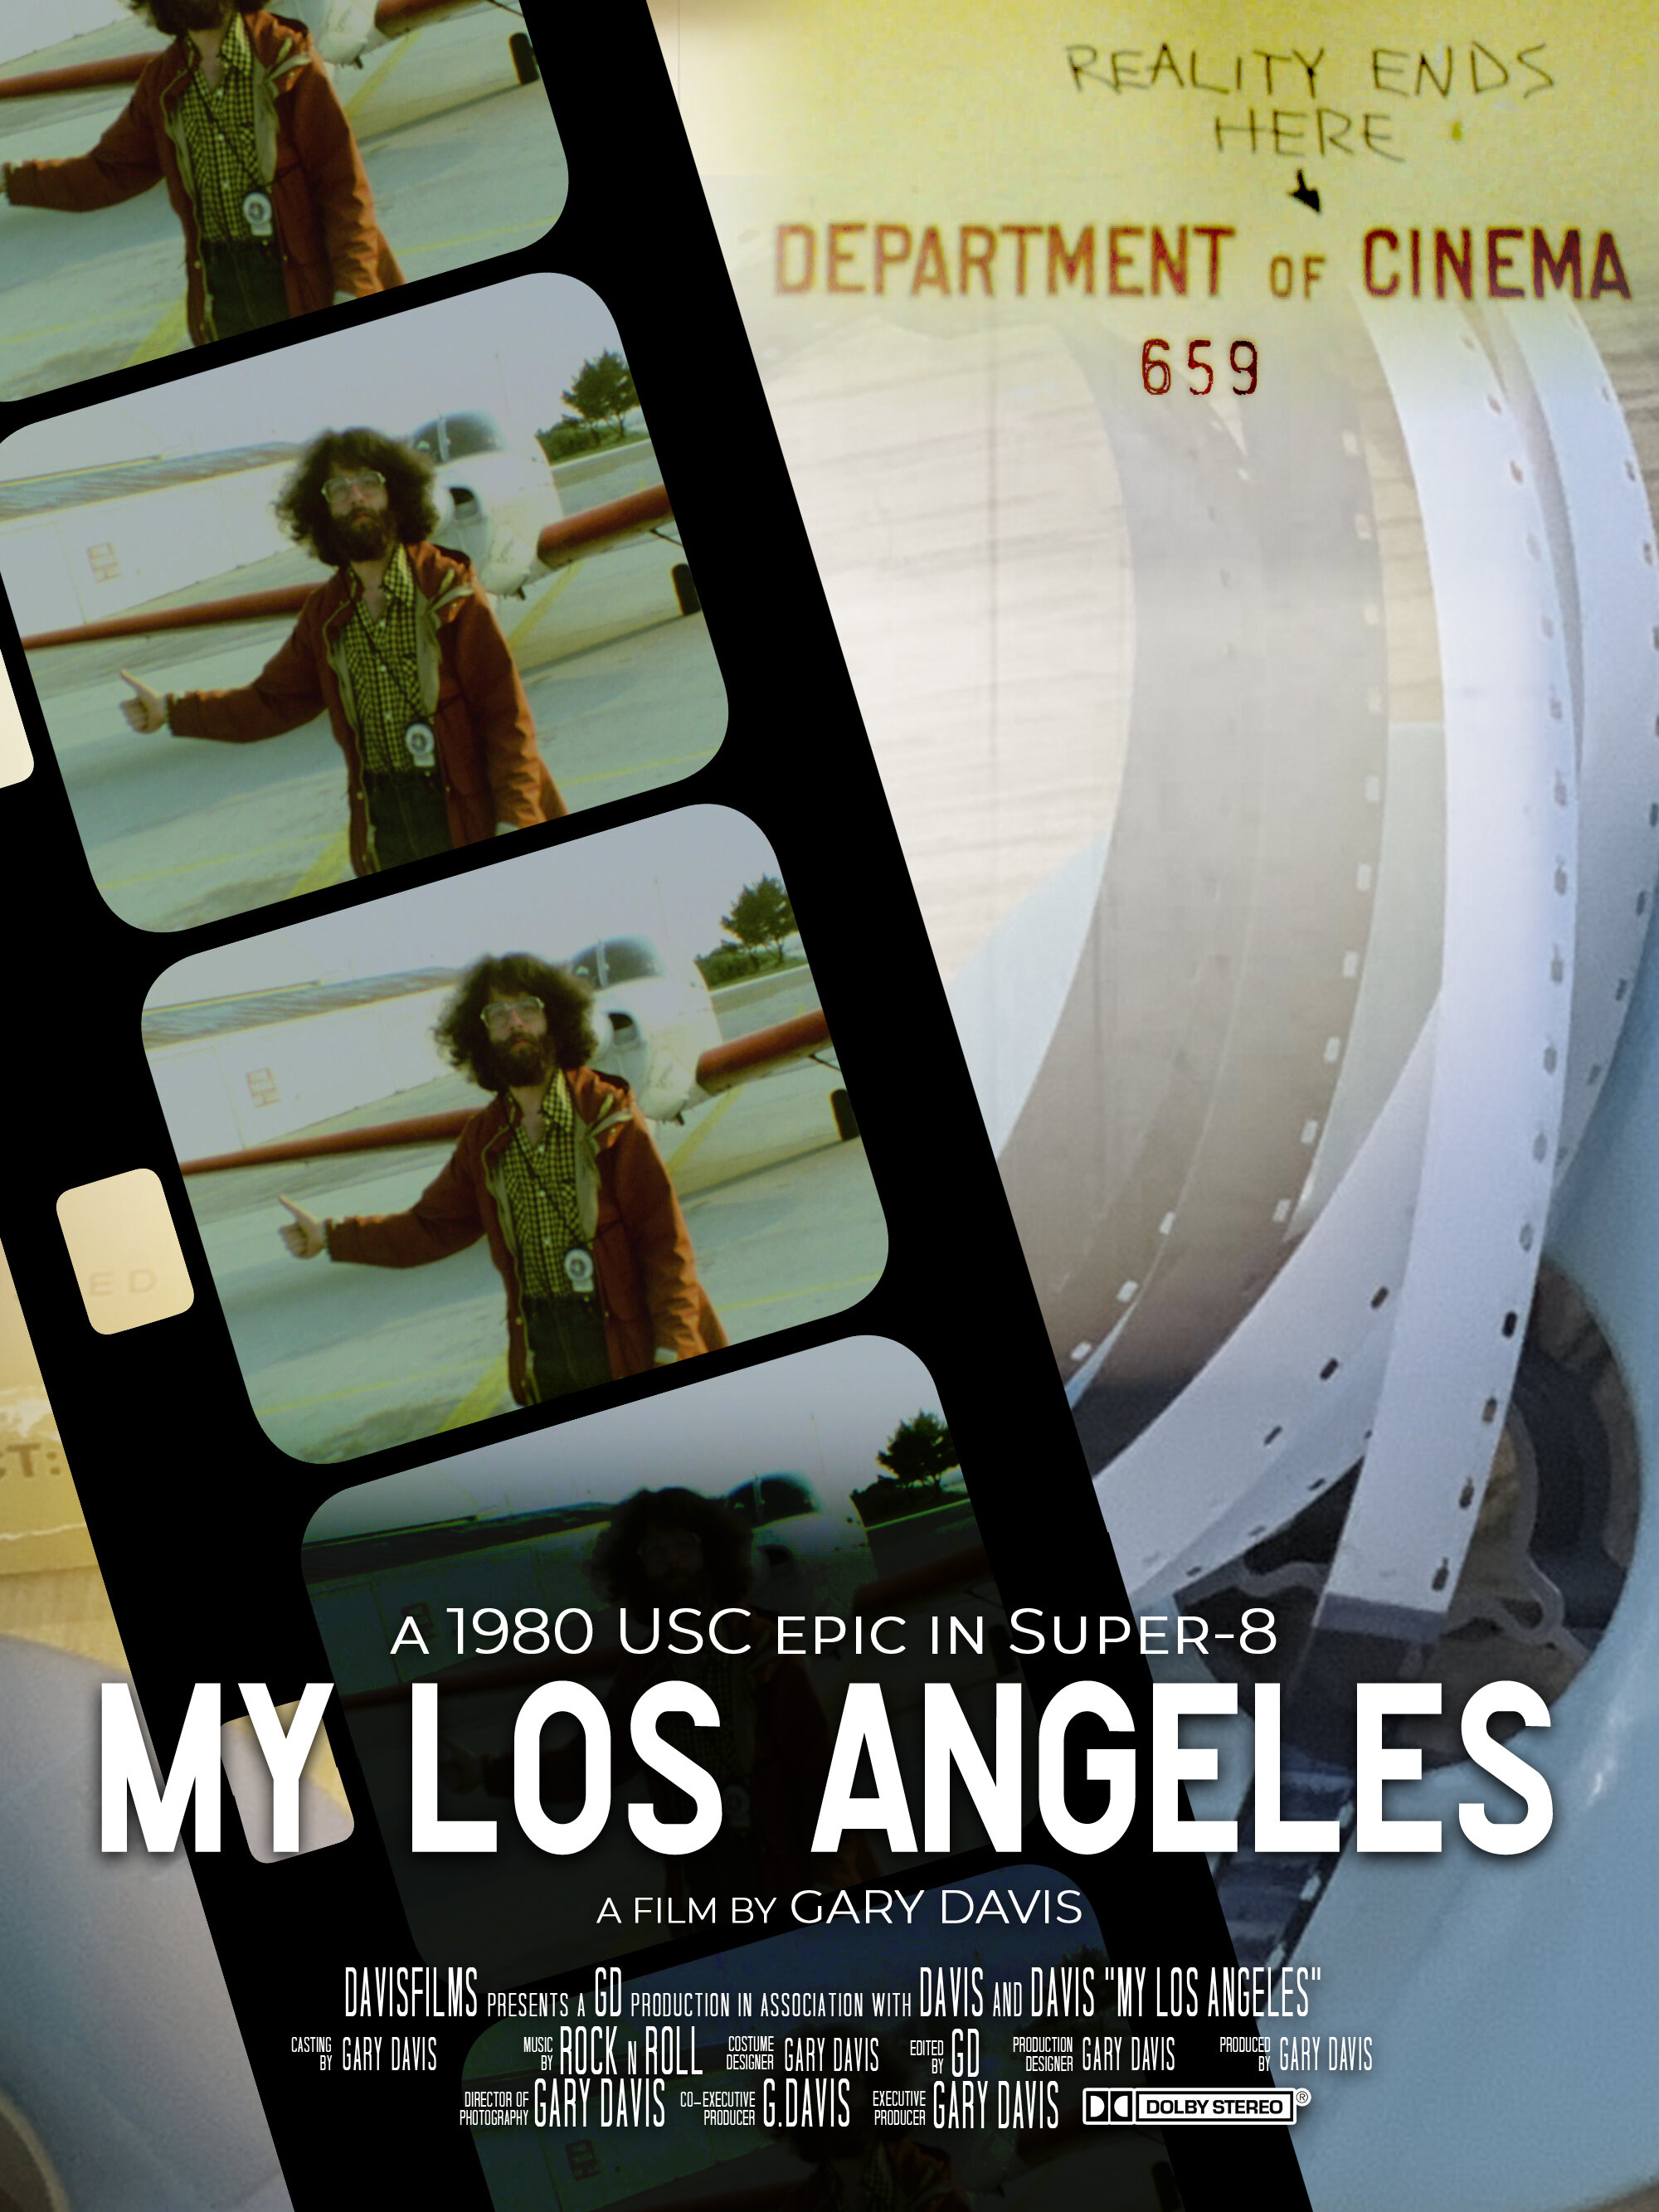 MY LOS ANGELES by Gary Davis